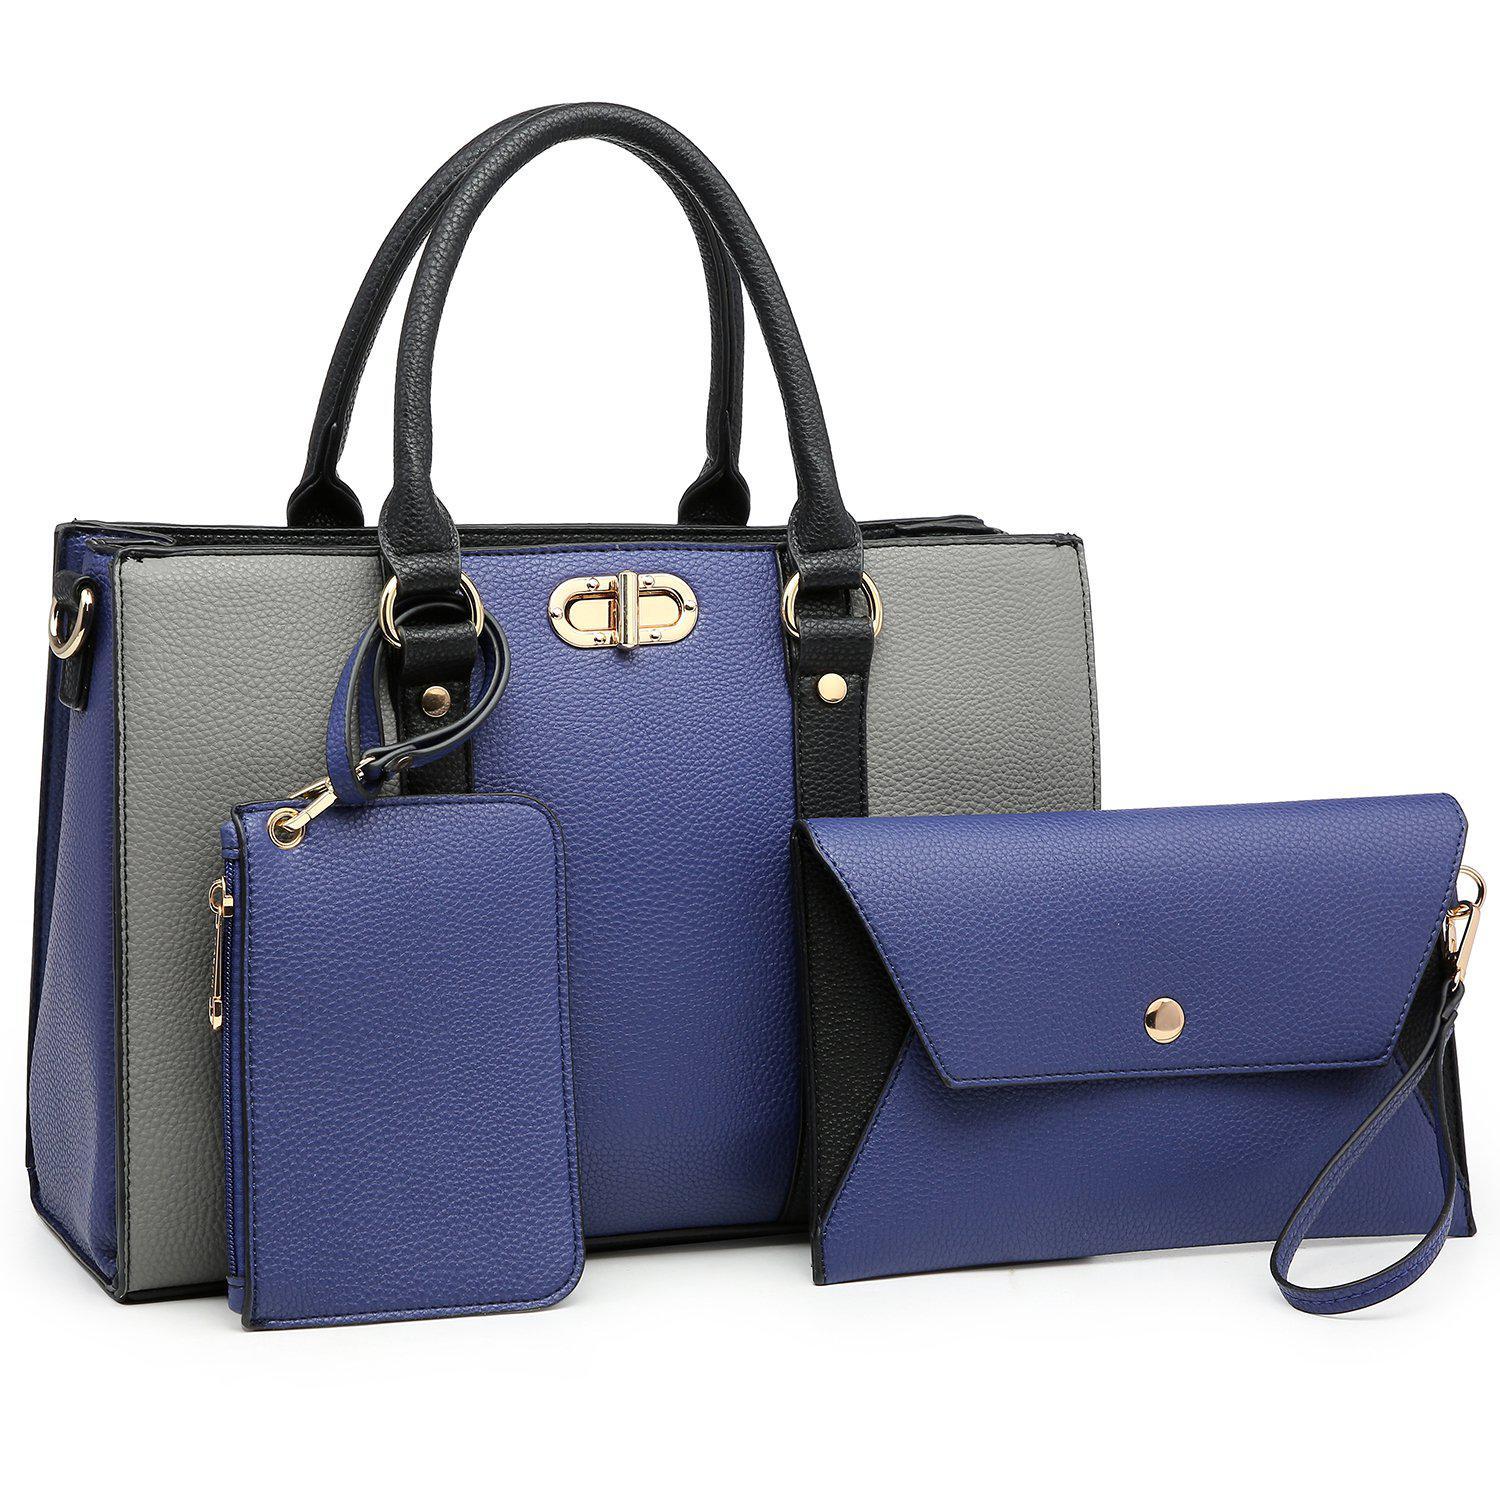 Hermès - Authenticated Double Sens Handbag - Leather Blue for Women, Very Good Condition